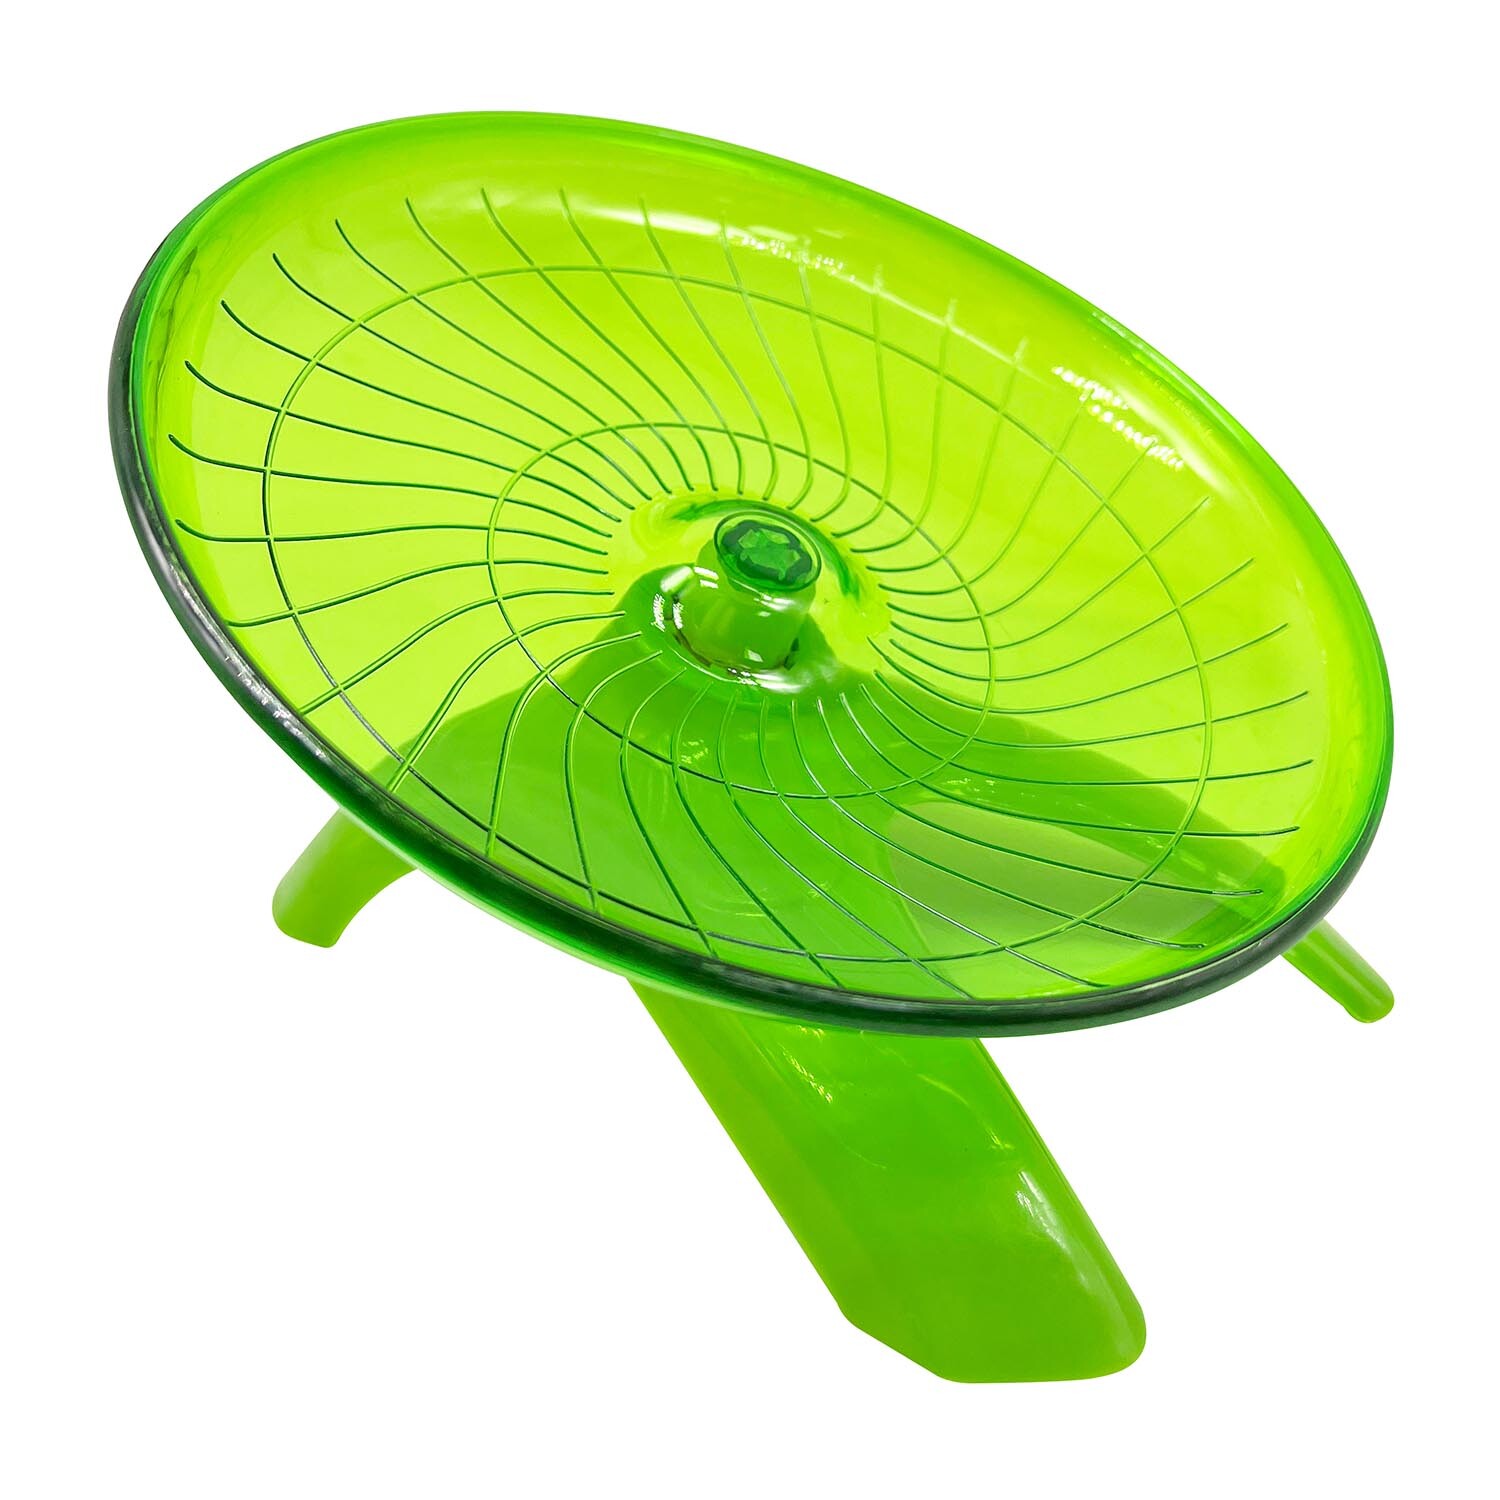 Spinning Exercise Wheel - Green Image 2